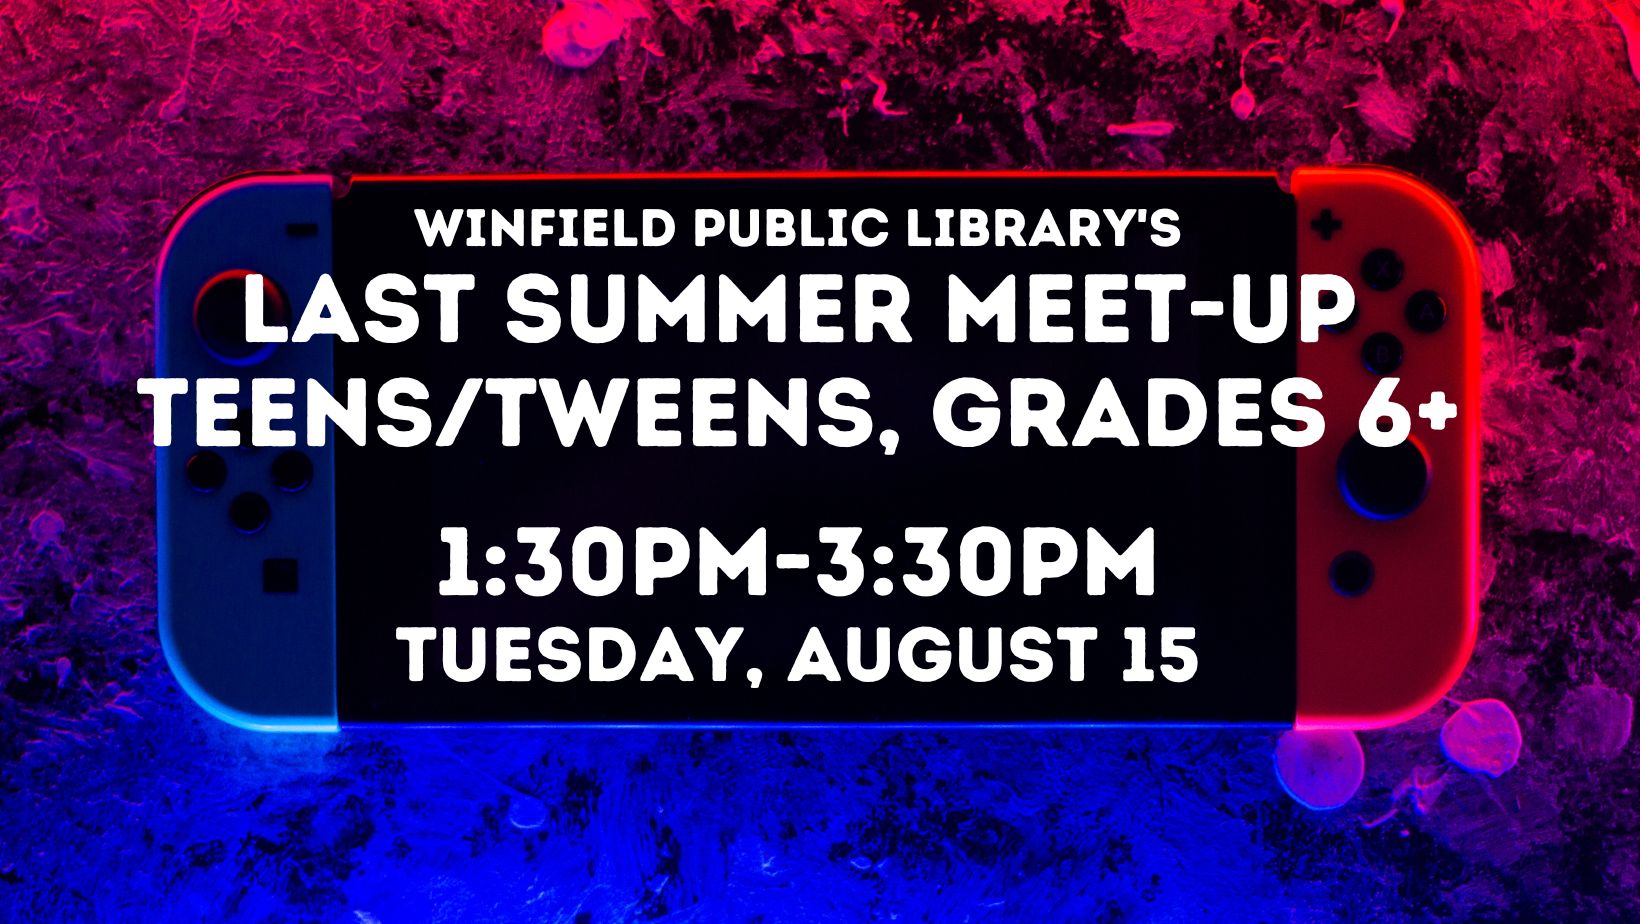 image reads last summer meet-up for tweens and teens grades 6+